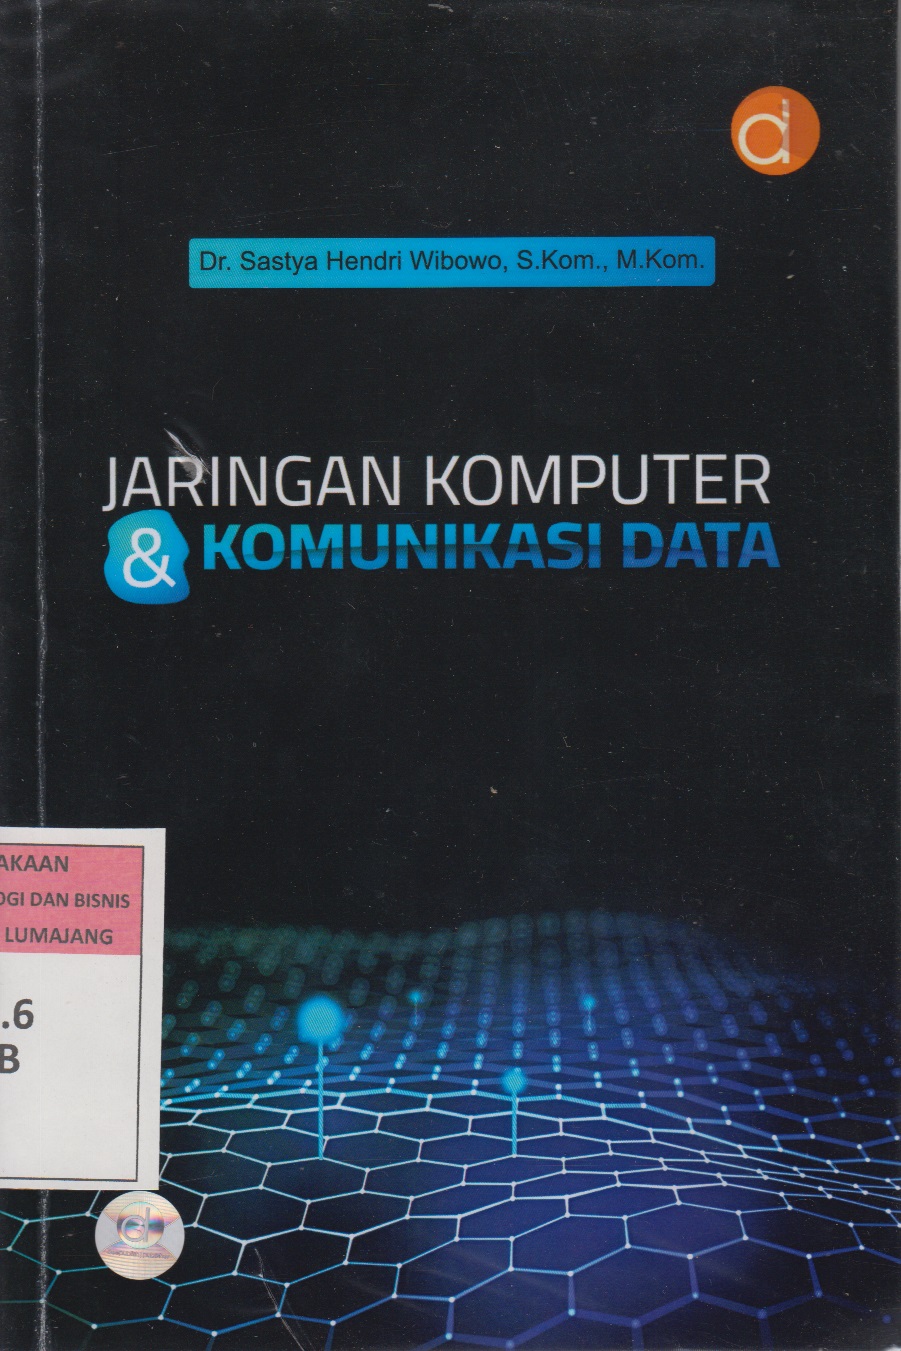 Jaringan komputer dan komunikasi data